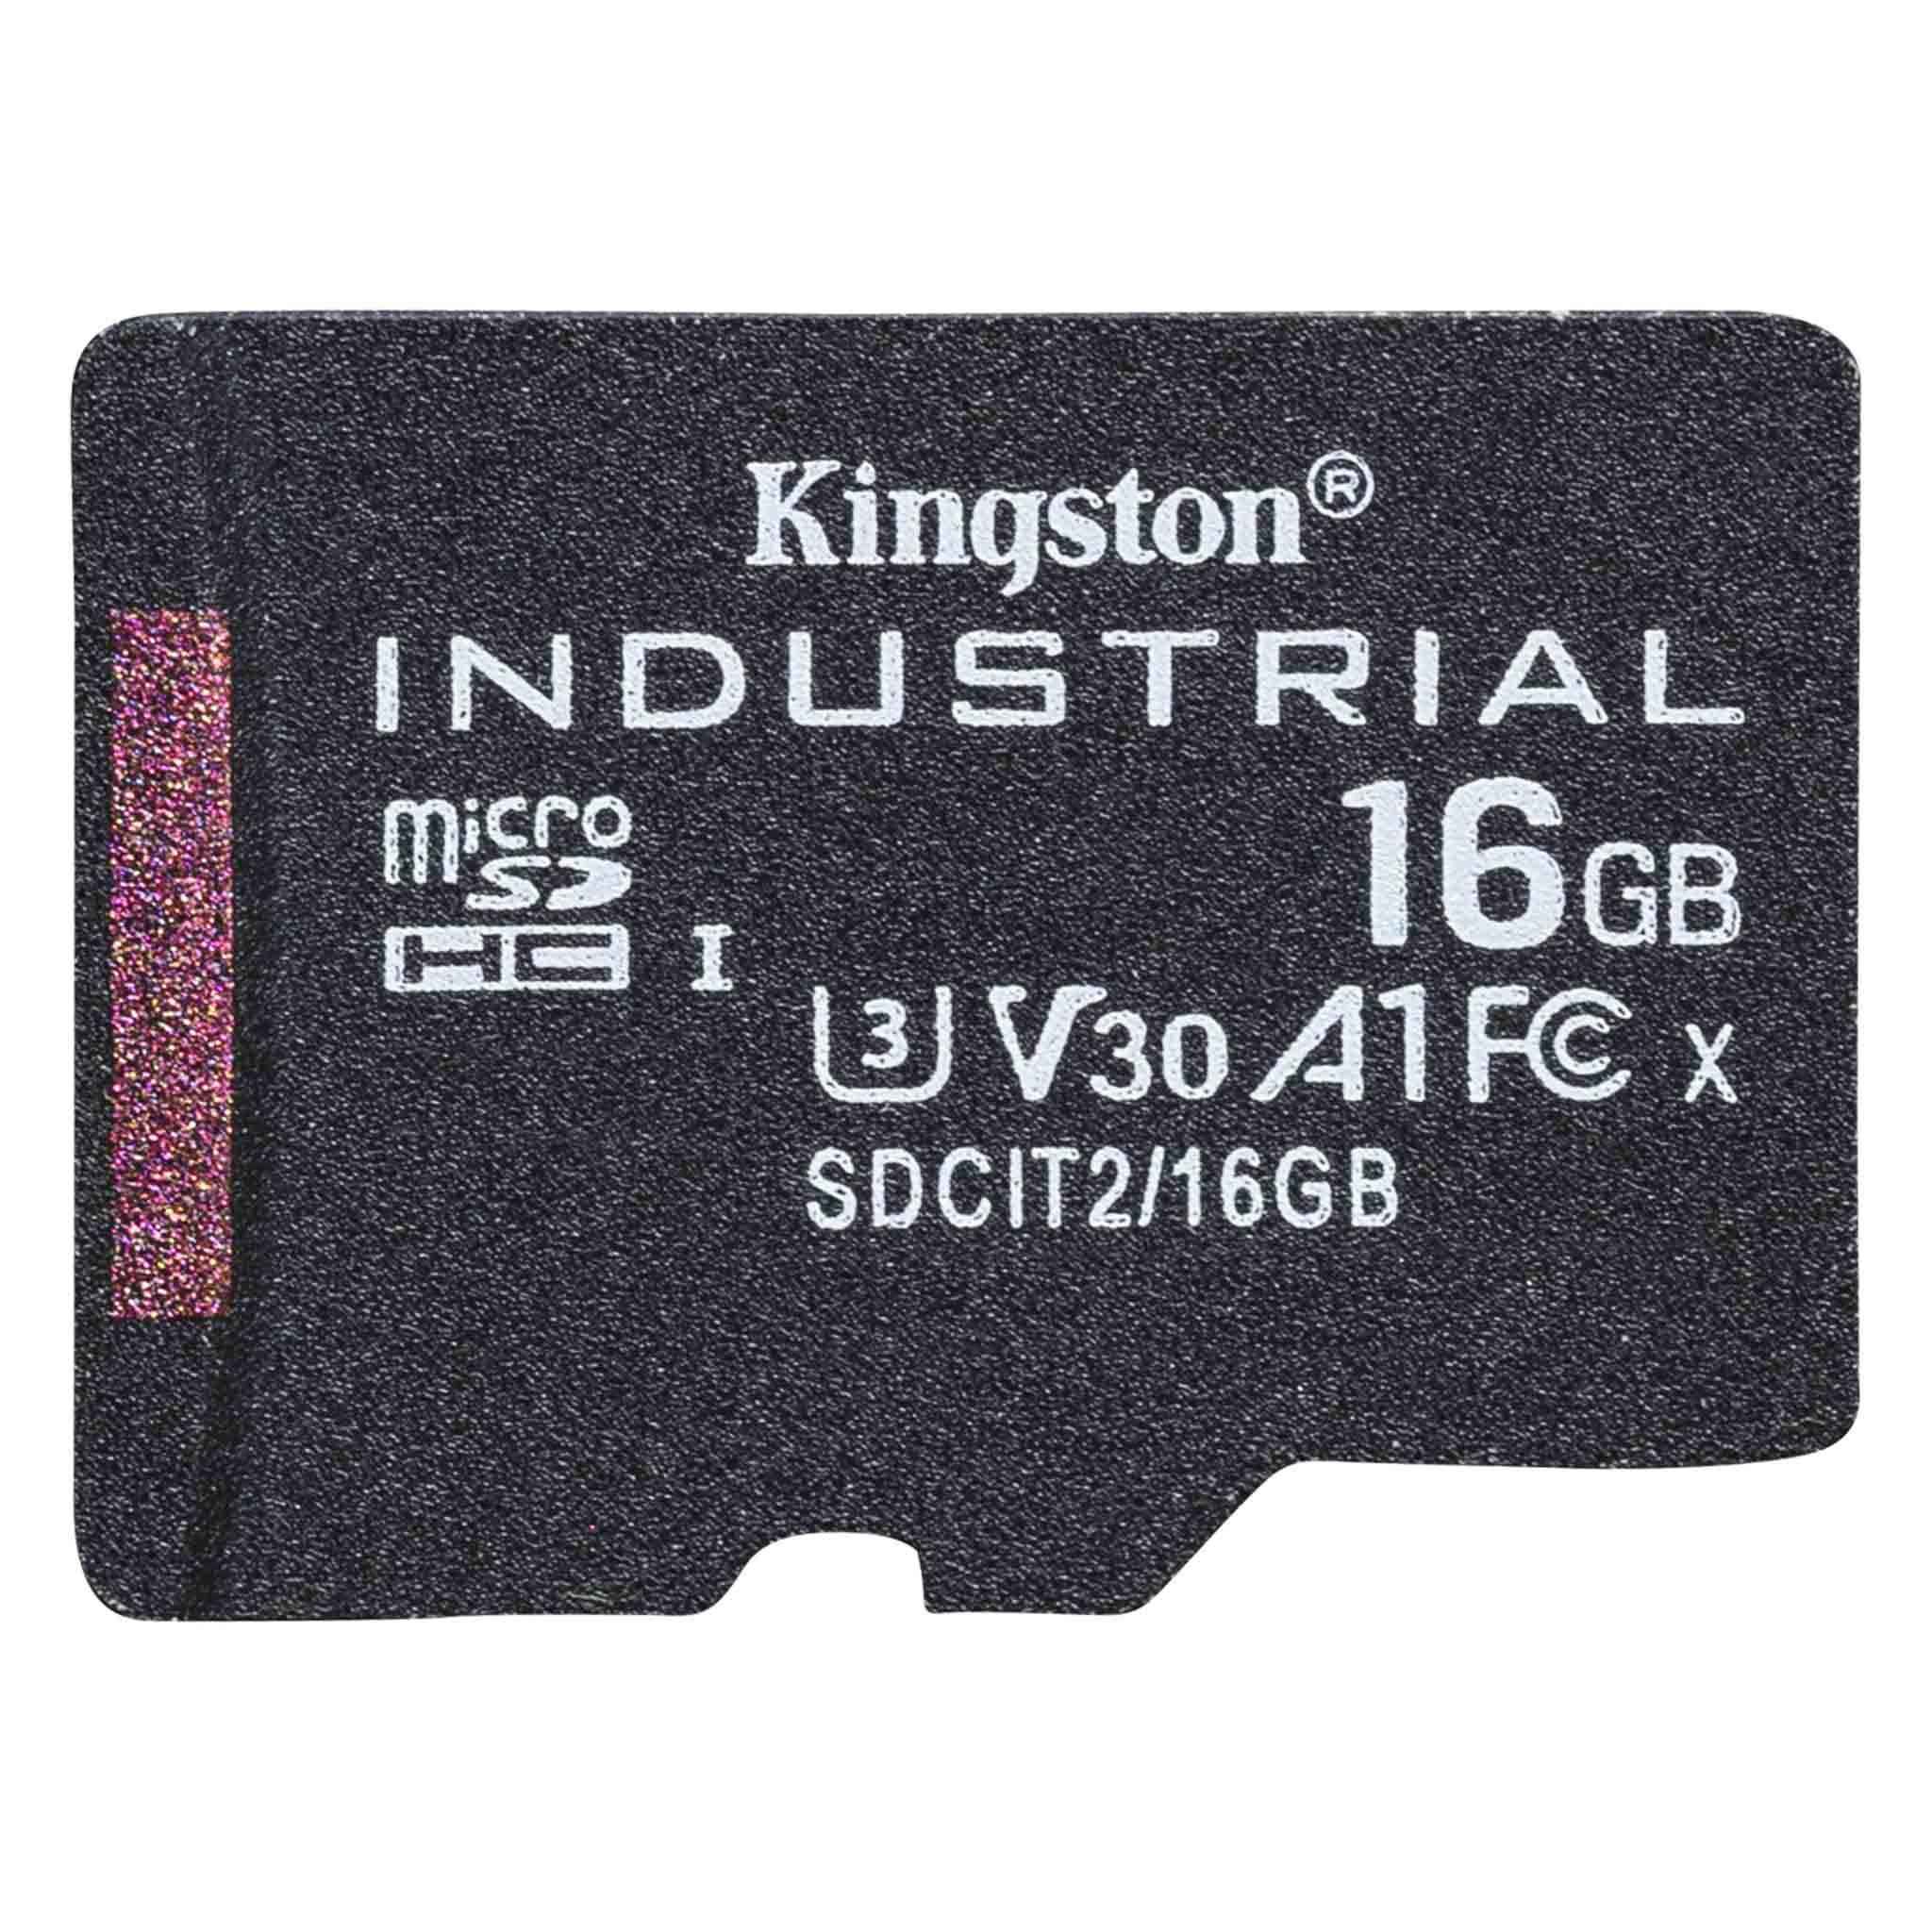 90MBs Works for Kingston Kingston Industrial Grade 8GB Motorola Delux MicroSDHC Card Verified by SanFlash. 